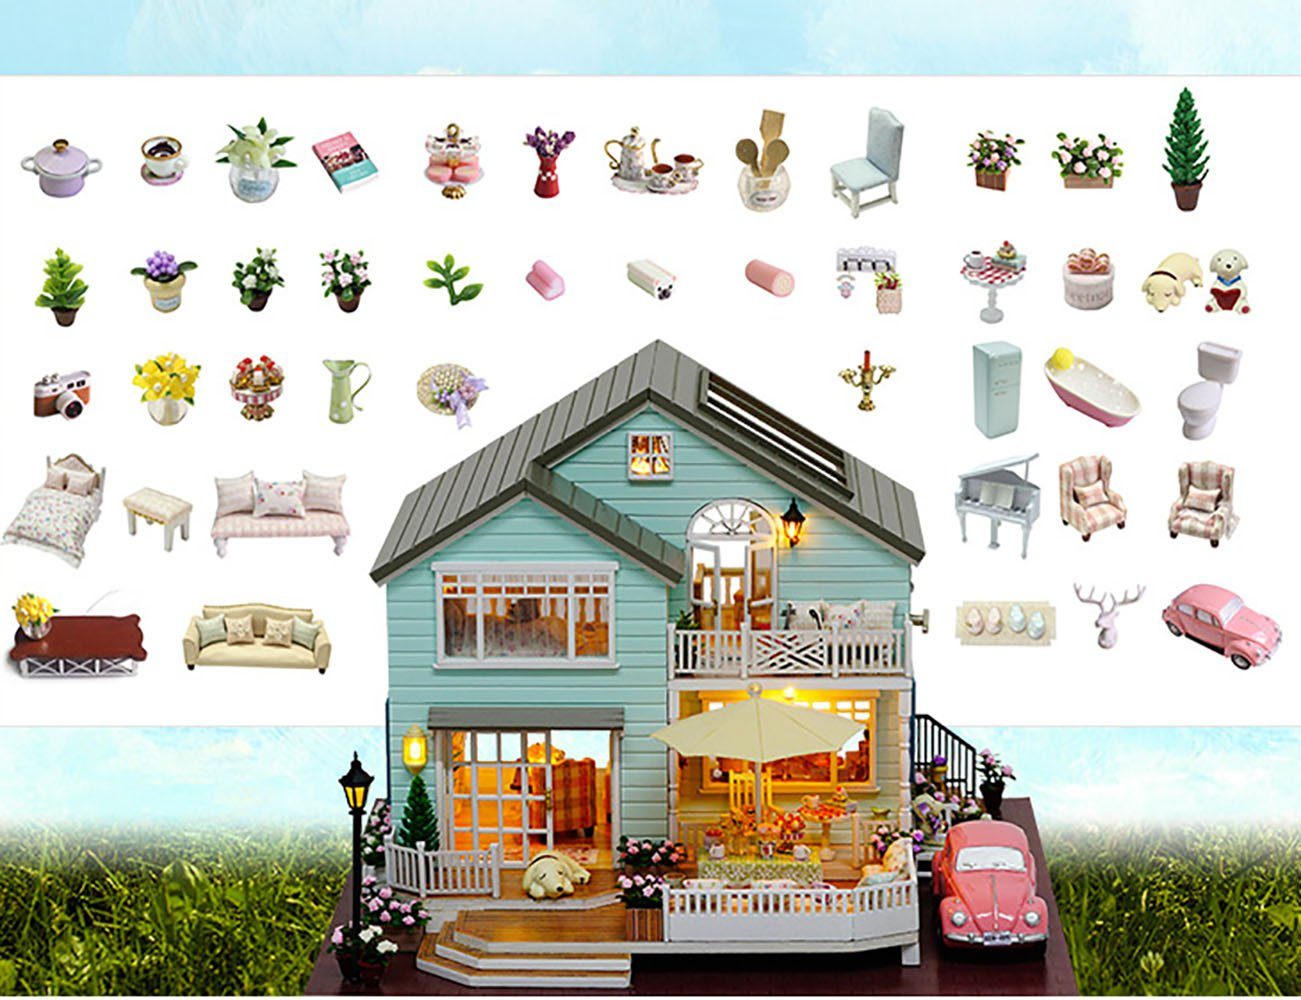 Haus 3D-Puzzle, 1:32, Miniature Miniaturhaus, Room Puzzleteile, Cute Queenstown, Modellbausatz DIY Maßstab basteln Puppenhaus holz 3D-Puzzle zum